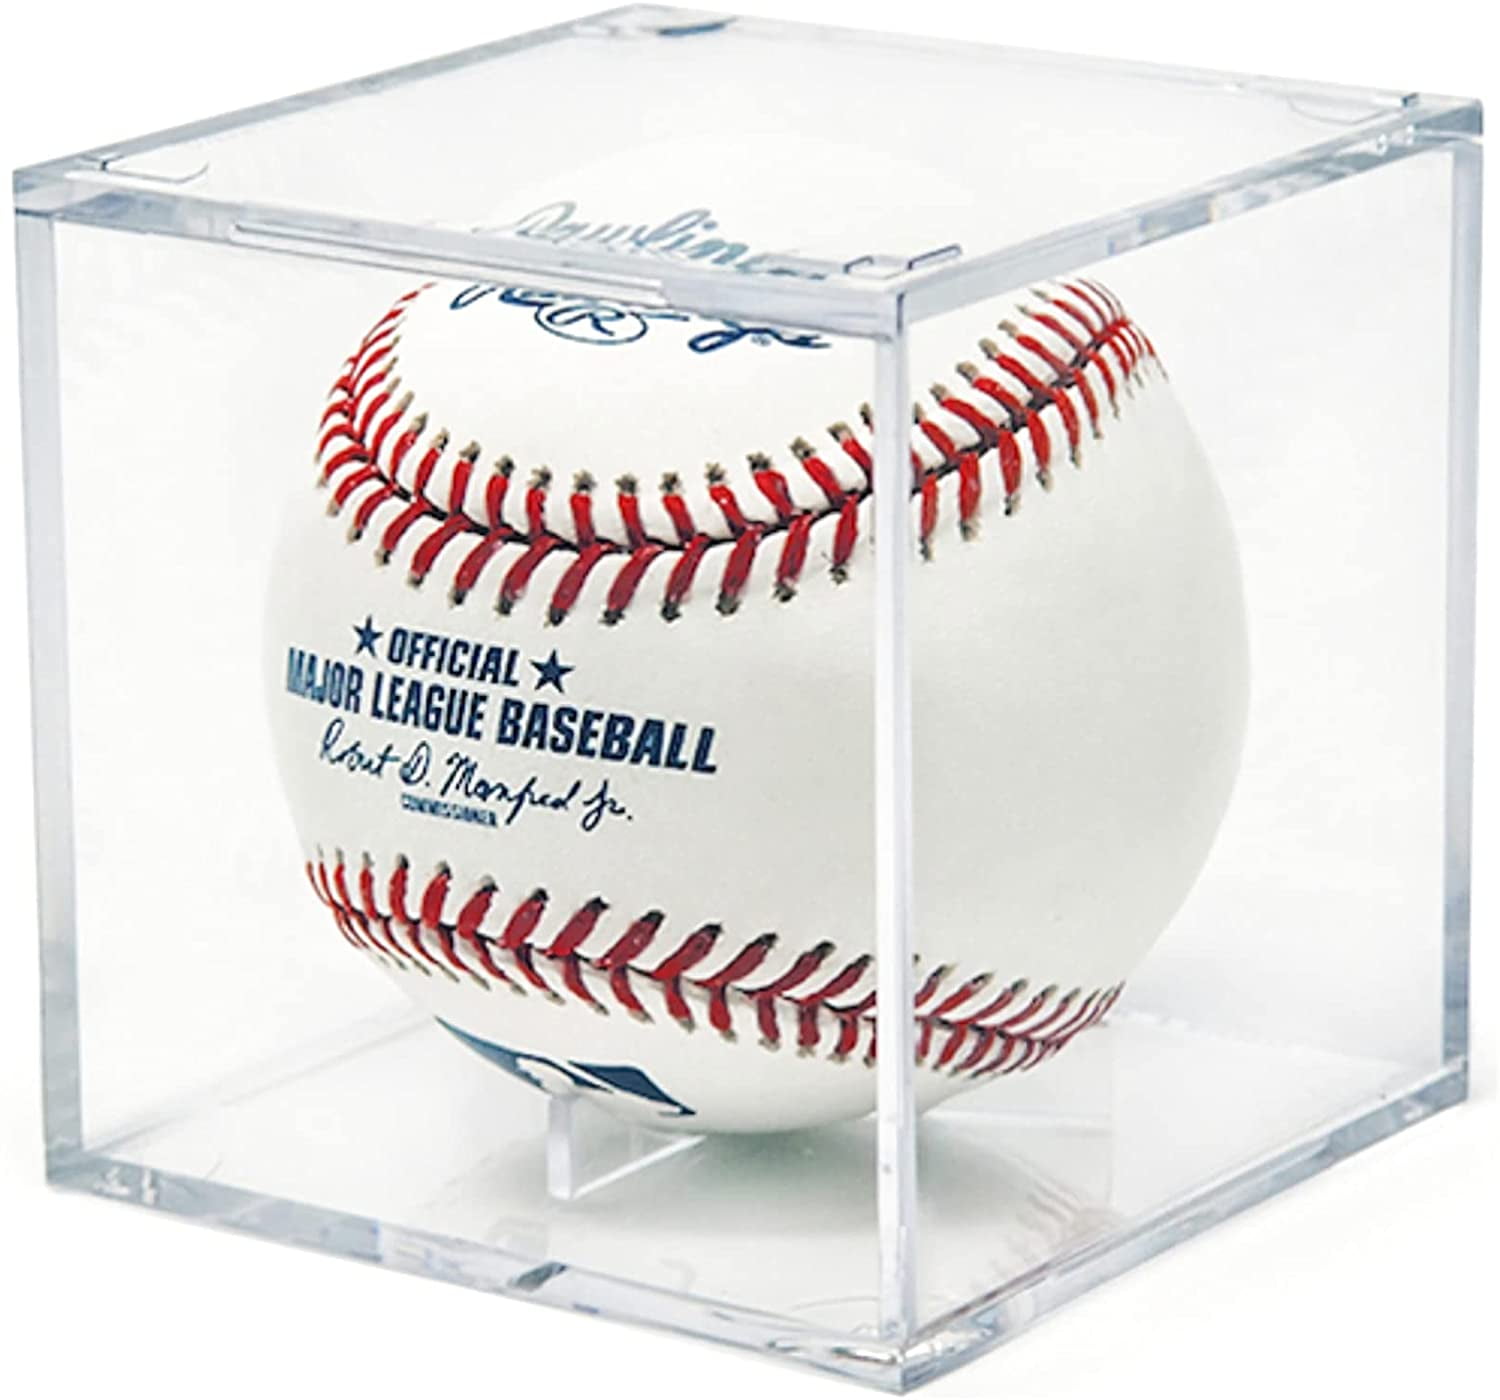 Pro UV Display Case Cabinet Holder Wall Rack for Bobble Head Figurine Baseball Cubes Display 